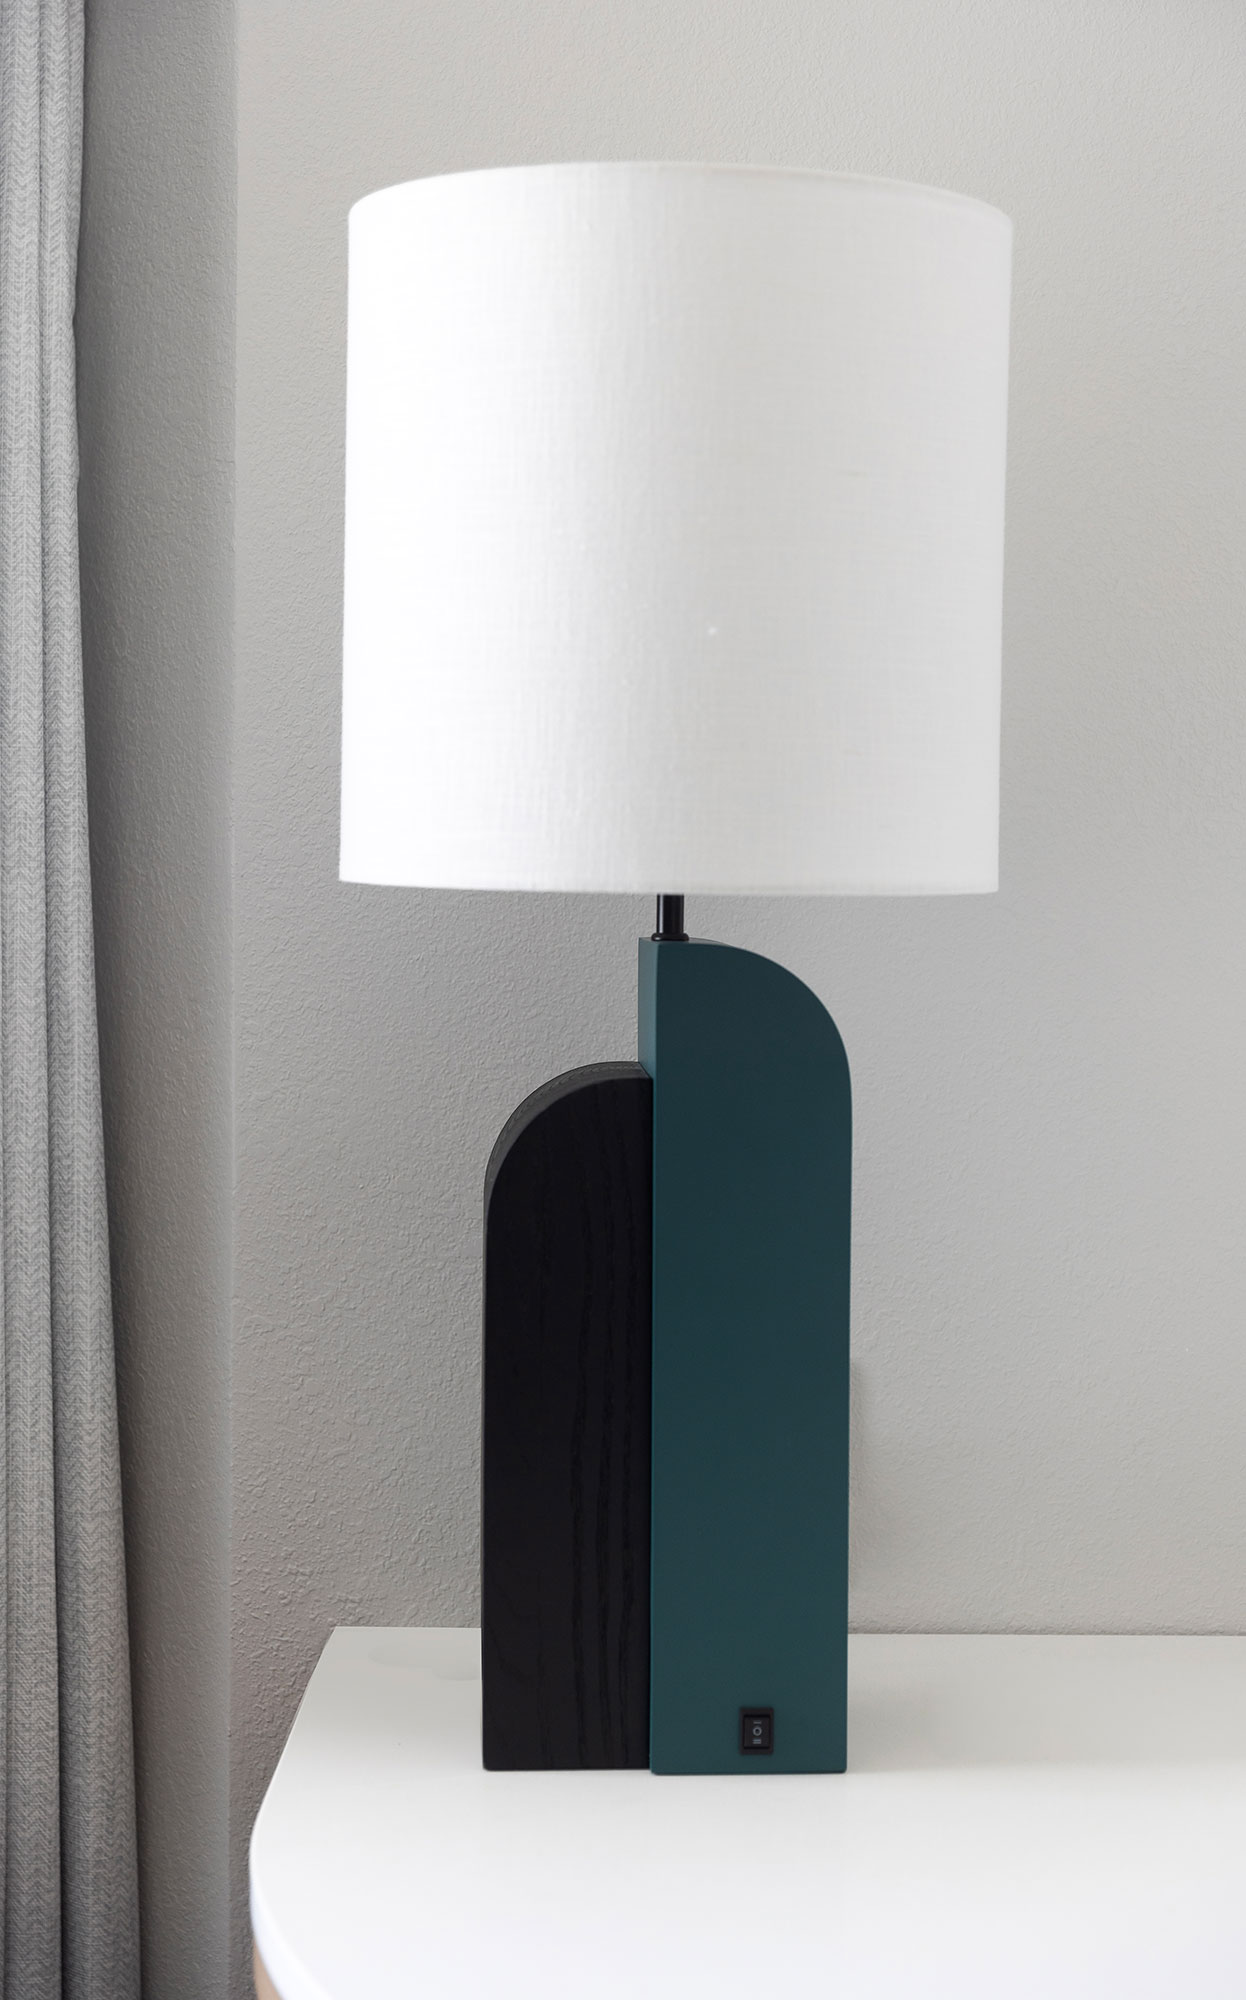 A modern lamp